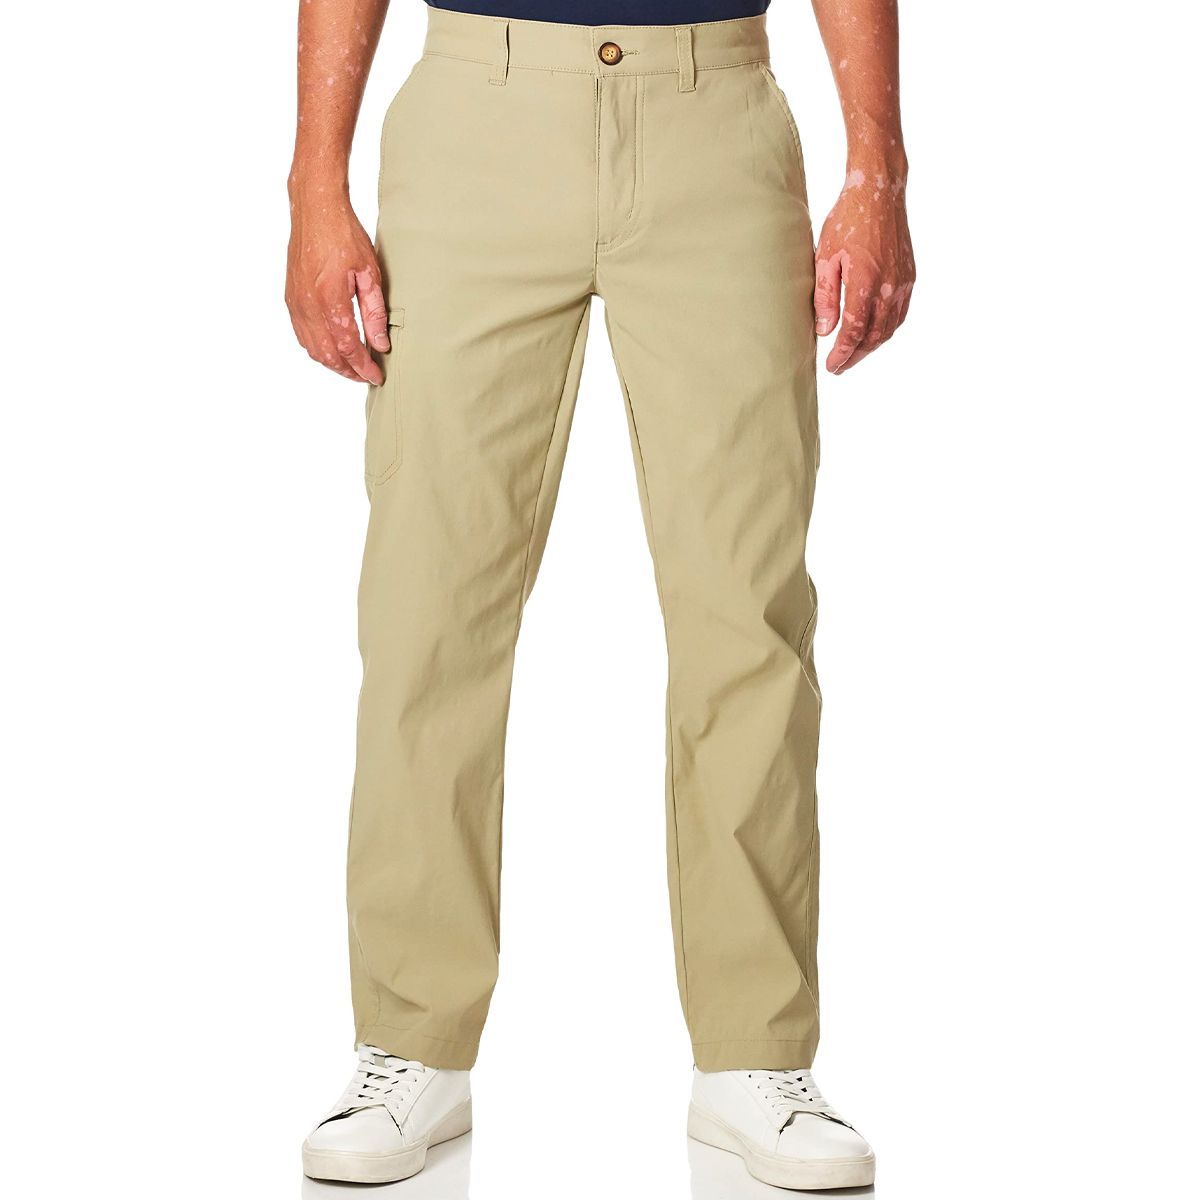 Dockers Wrinkle-Free Pants Comfort Khakis Pleated Relaxed Fit 478760001  Porcelain Khaki/Tan | DockersUSA